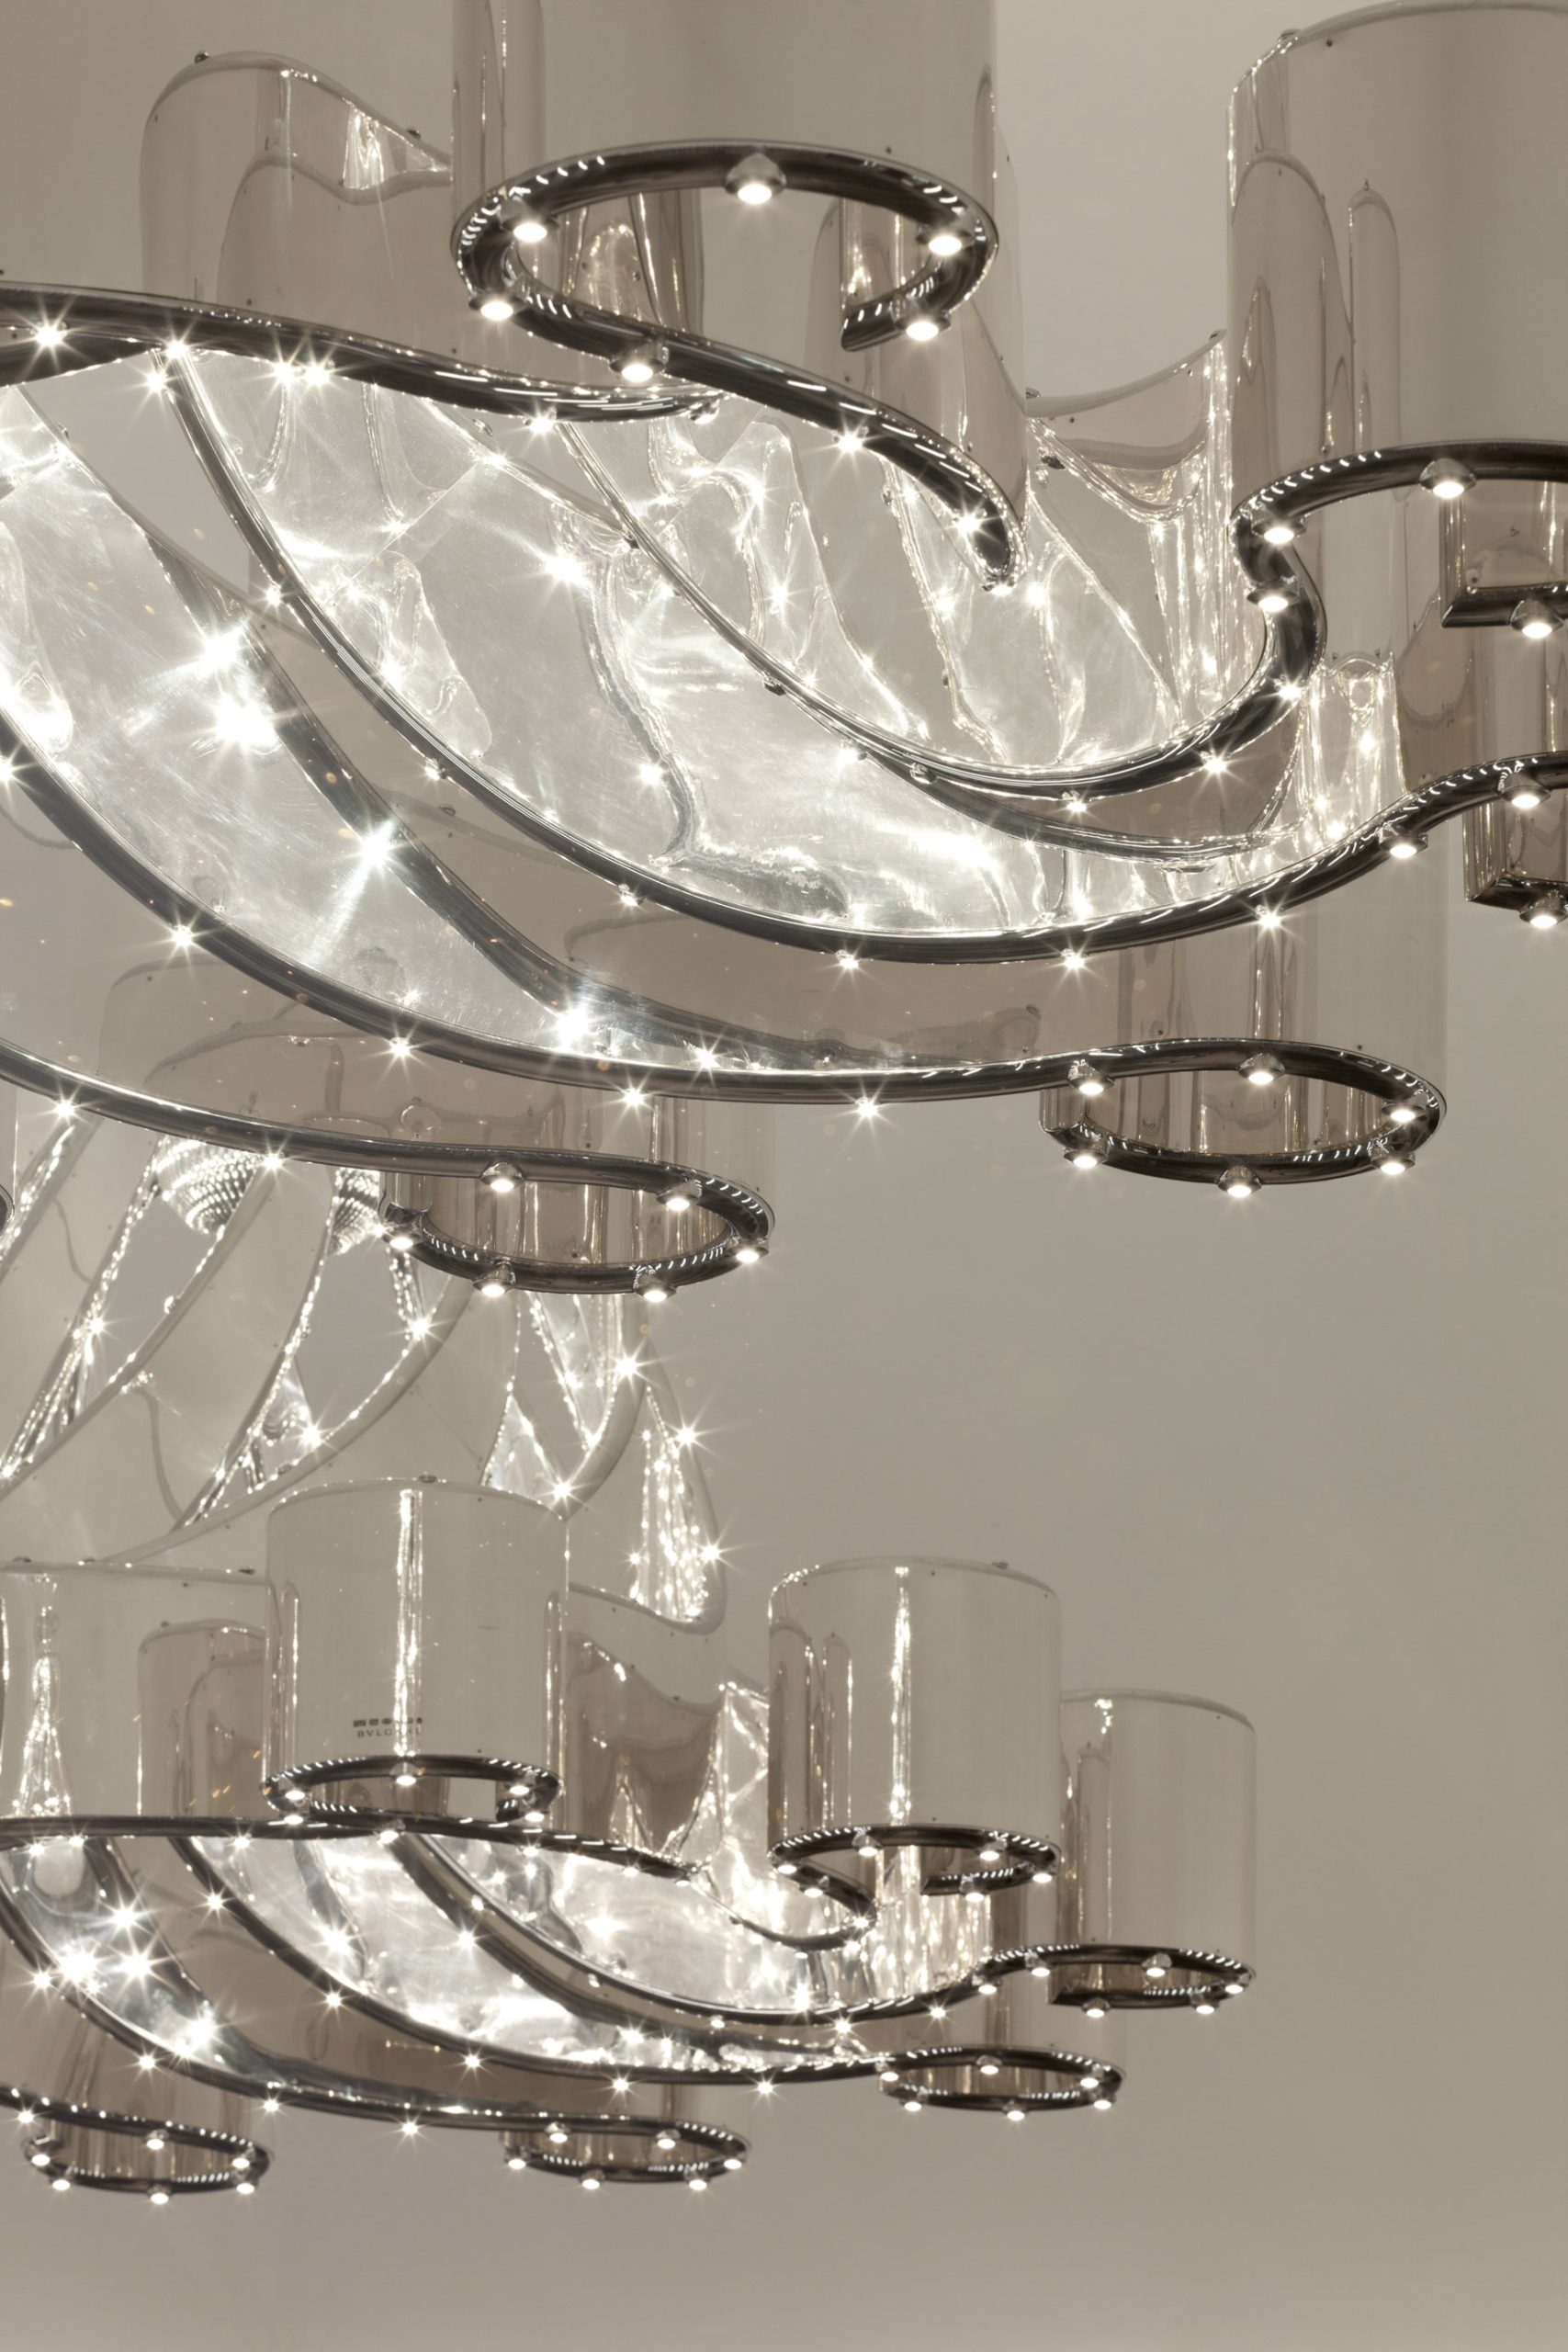 Bvlgari Hotel London - Knightsbridge, London, UK - Exquisite Glass Ceiling Chandelier